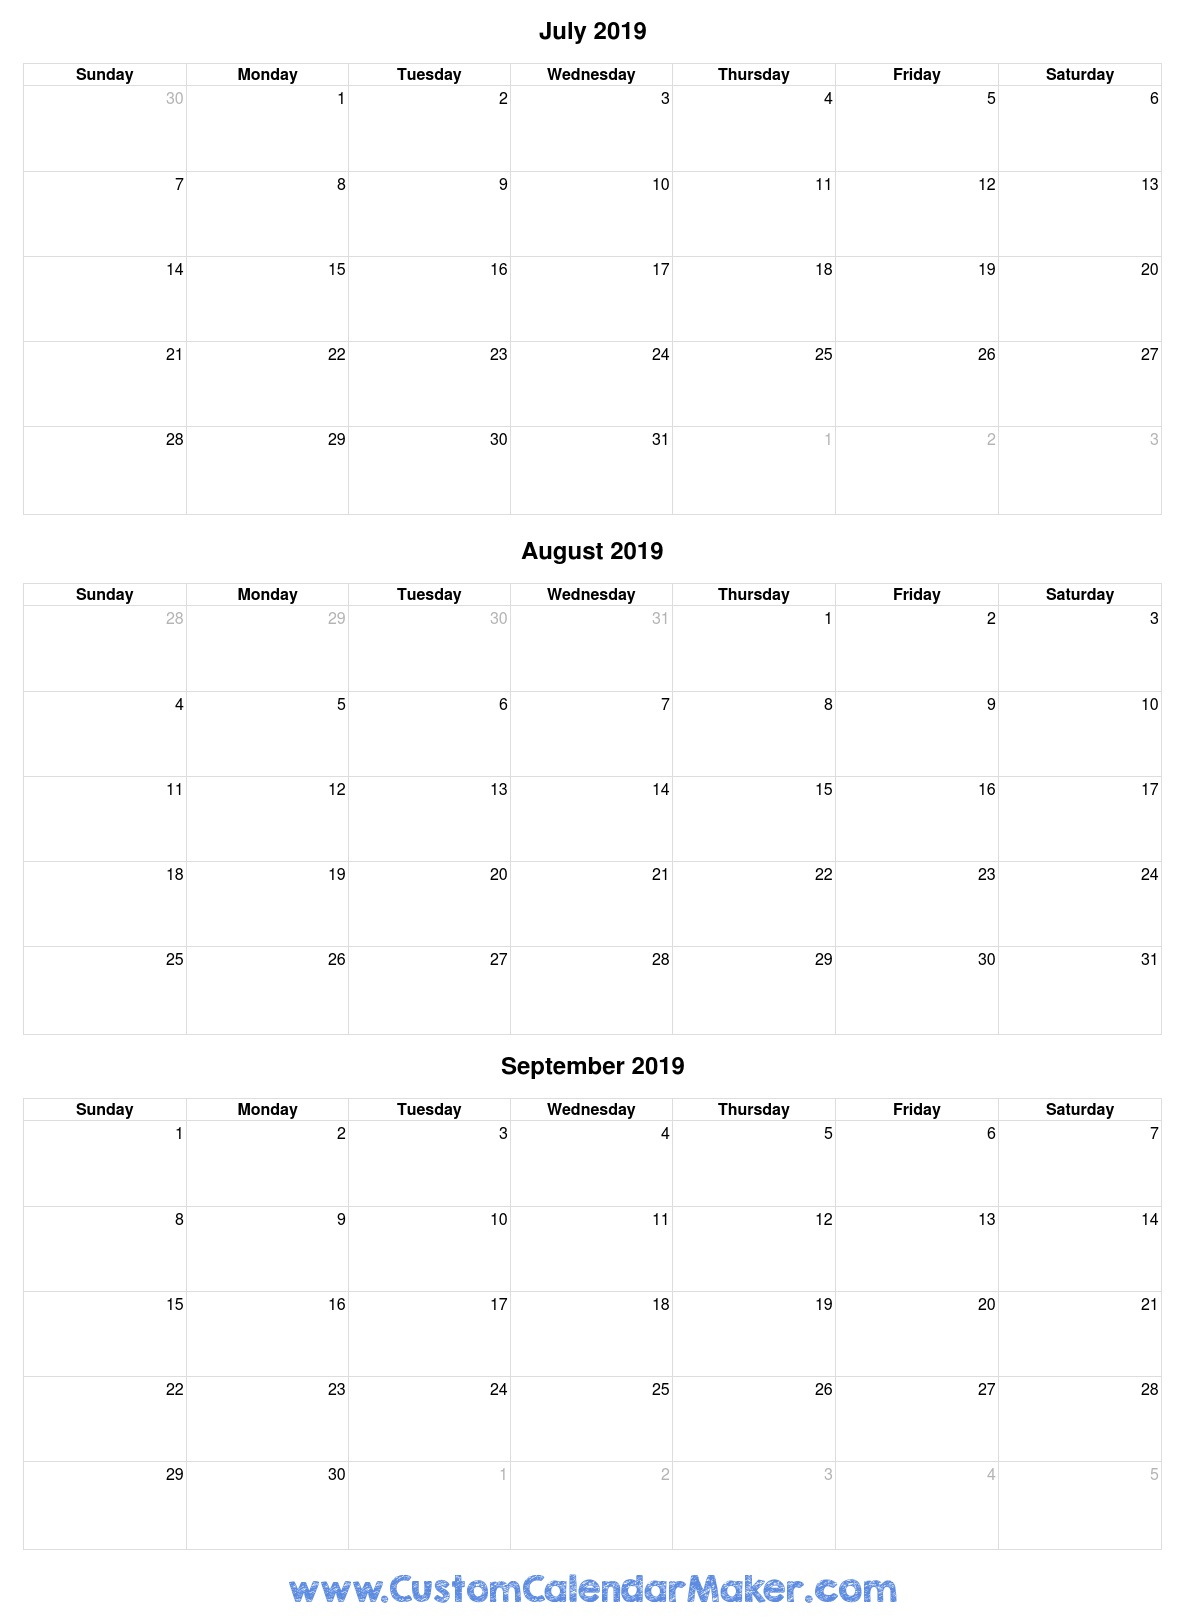 July To September 2019 Calendar - Free Printable Template